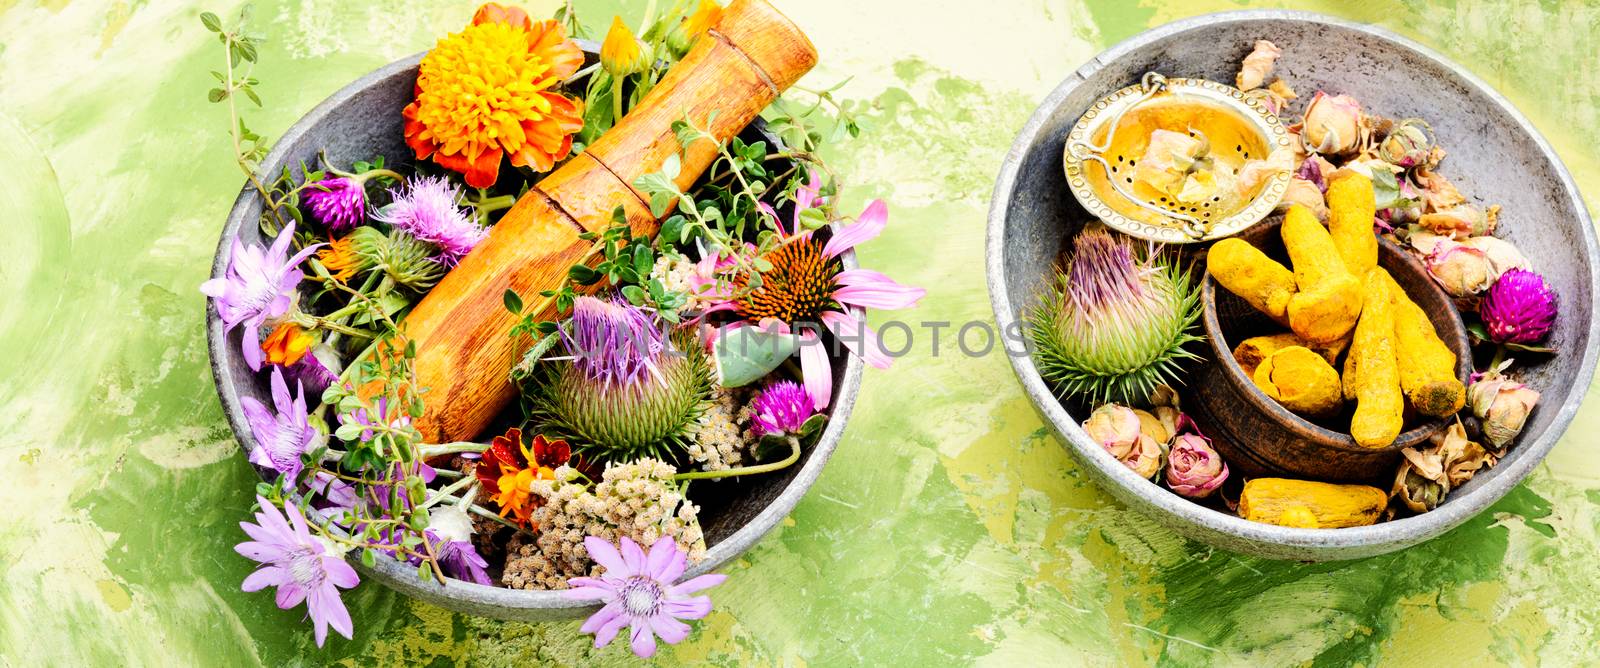 Medical herbs and flowers.Alternative medicine concept.Herbal medicine.Assorted natural medical herbs